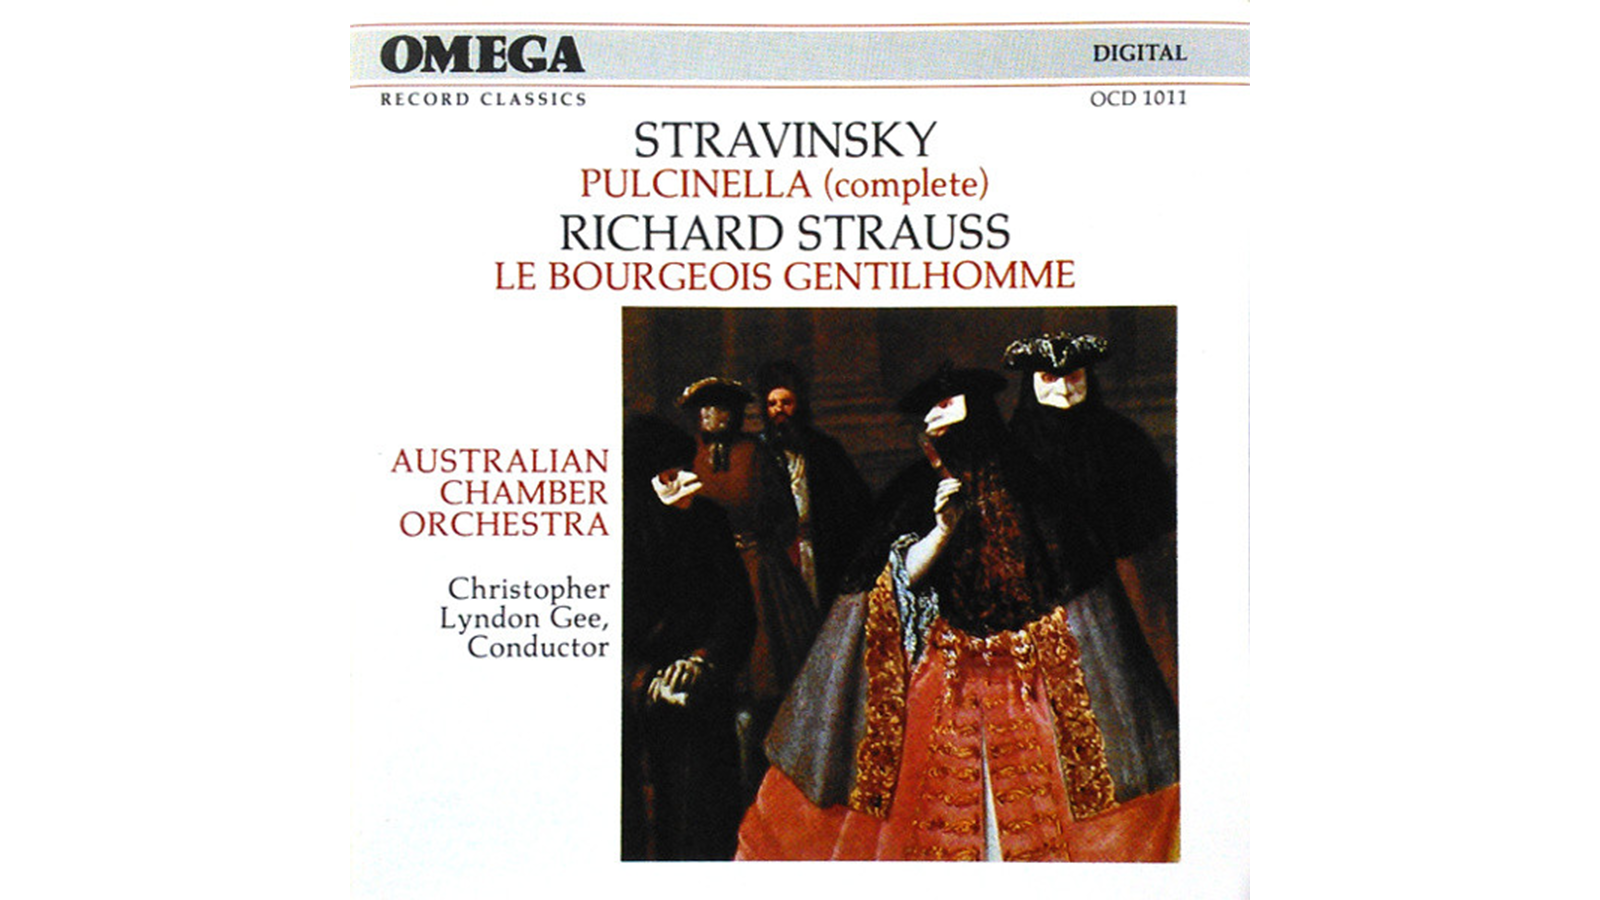 ACO Stravinsky recorded in the concert hall in 1988